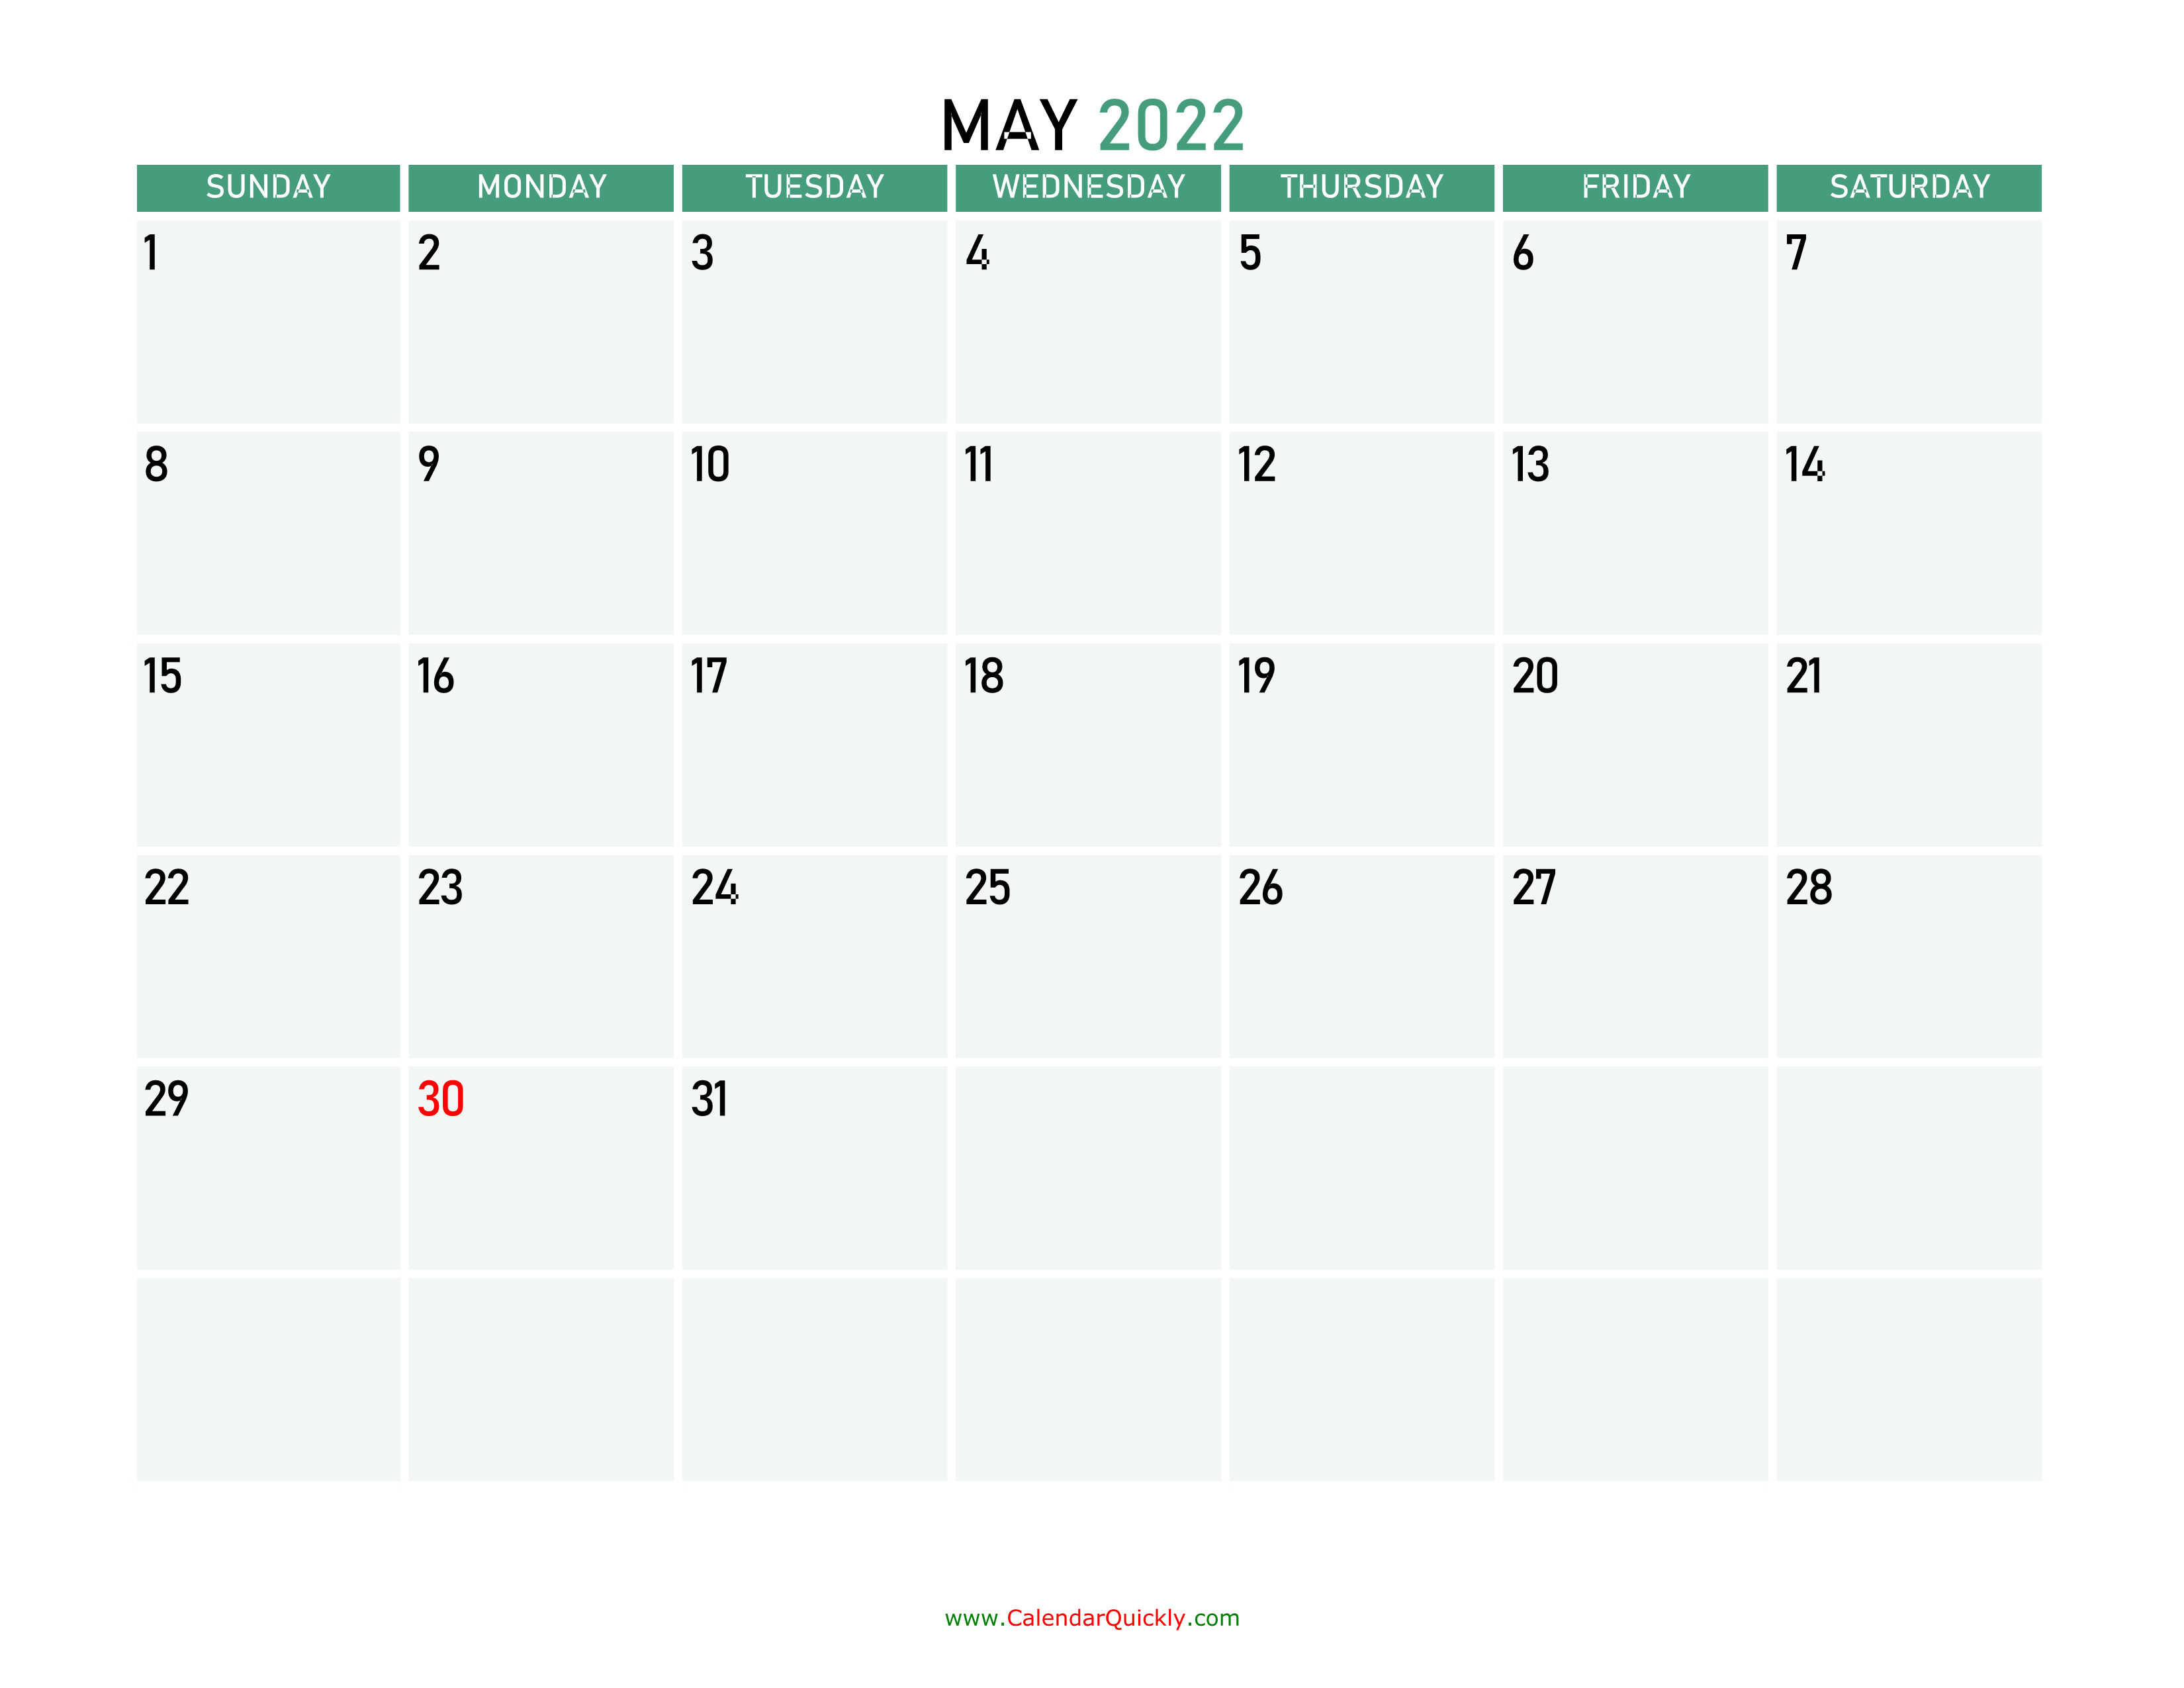 May 2022 Calendar Free Printable Calendar Templates May 2022 Calendar